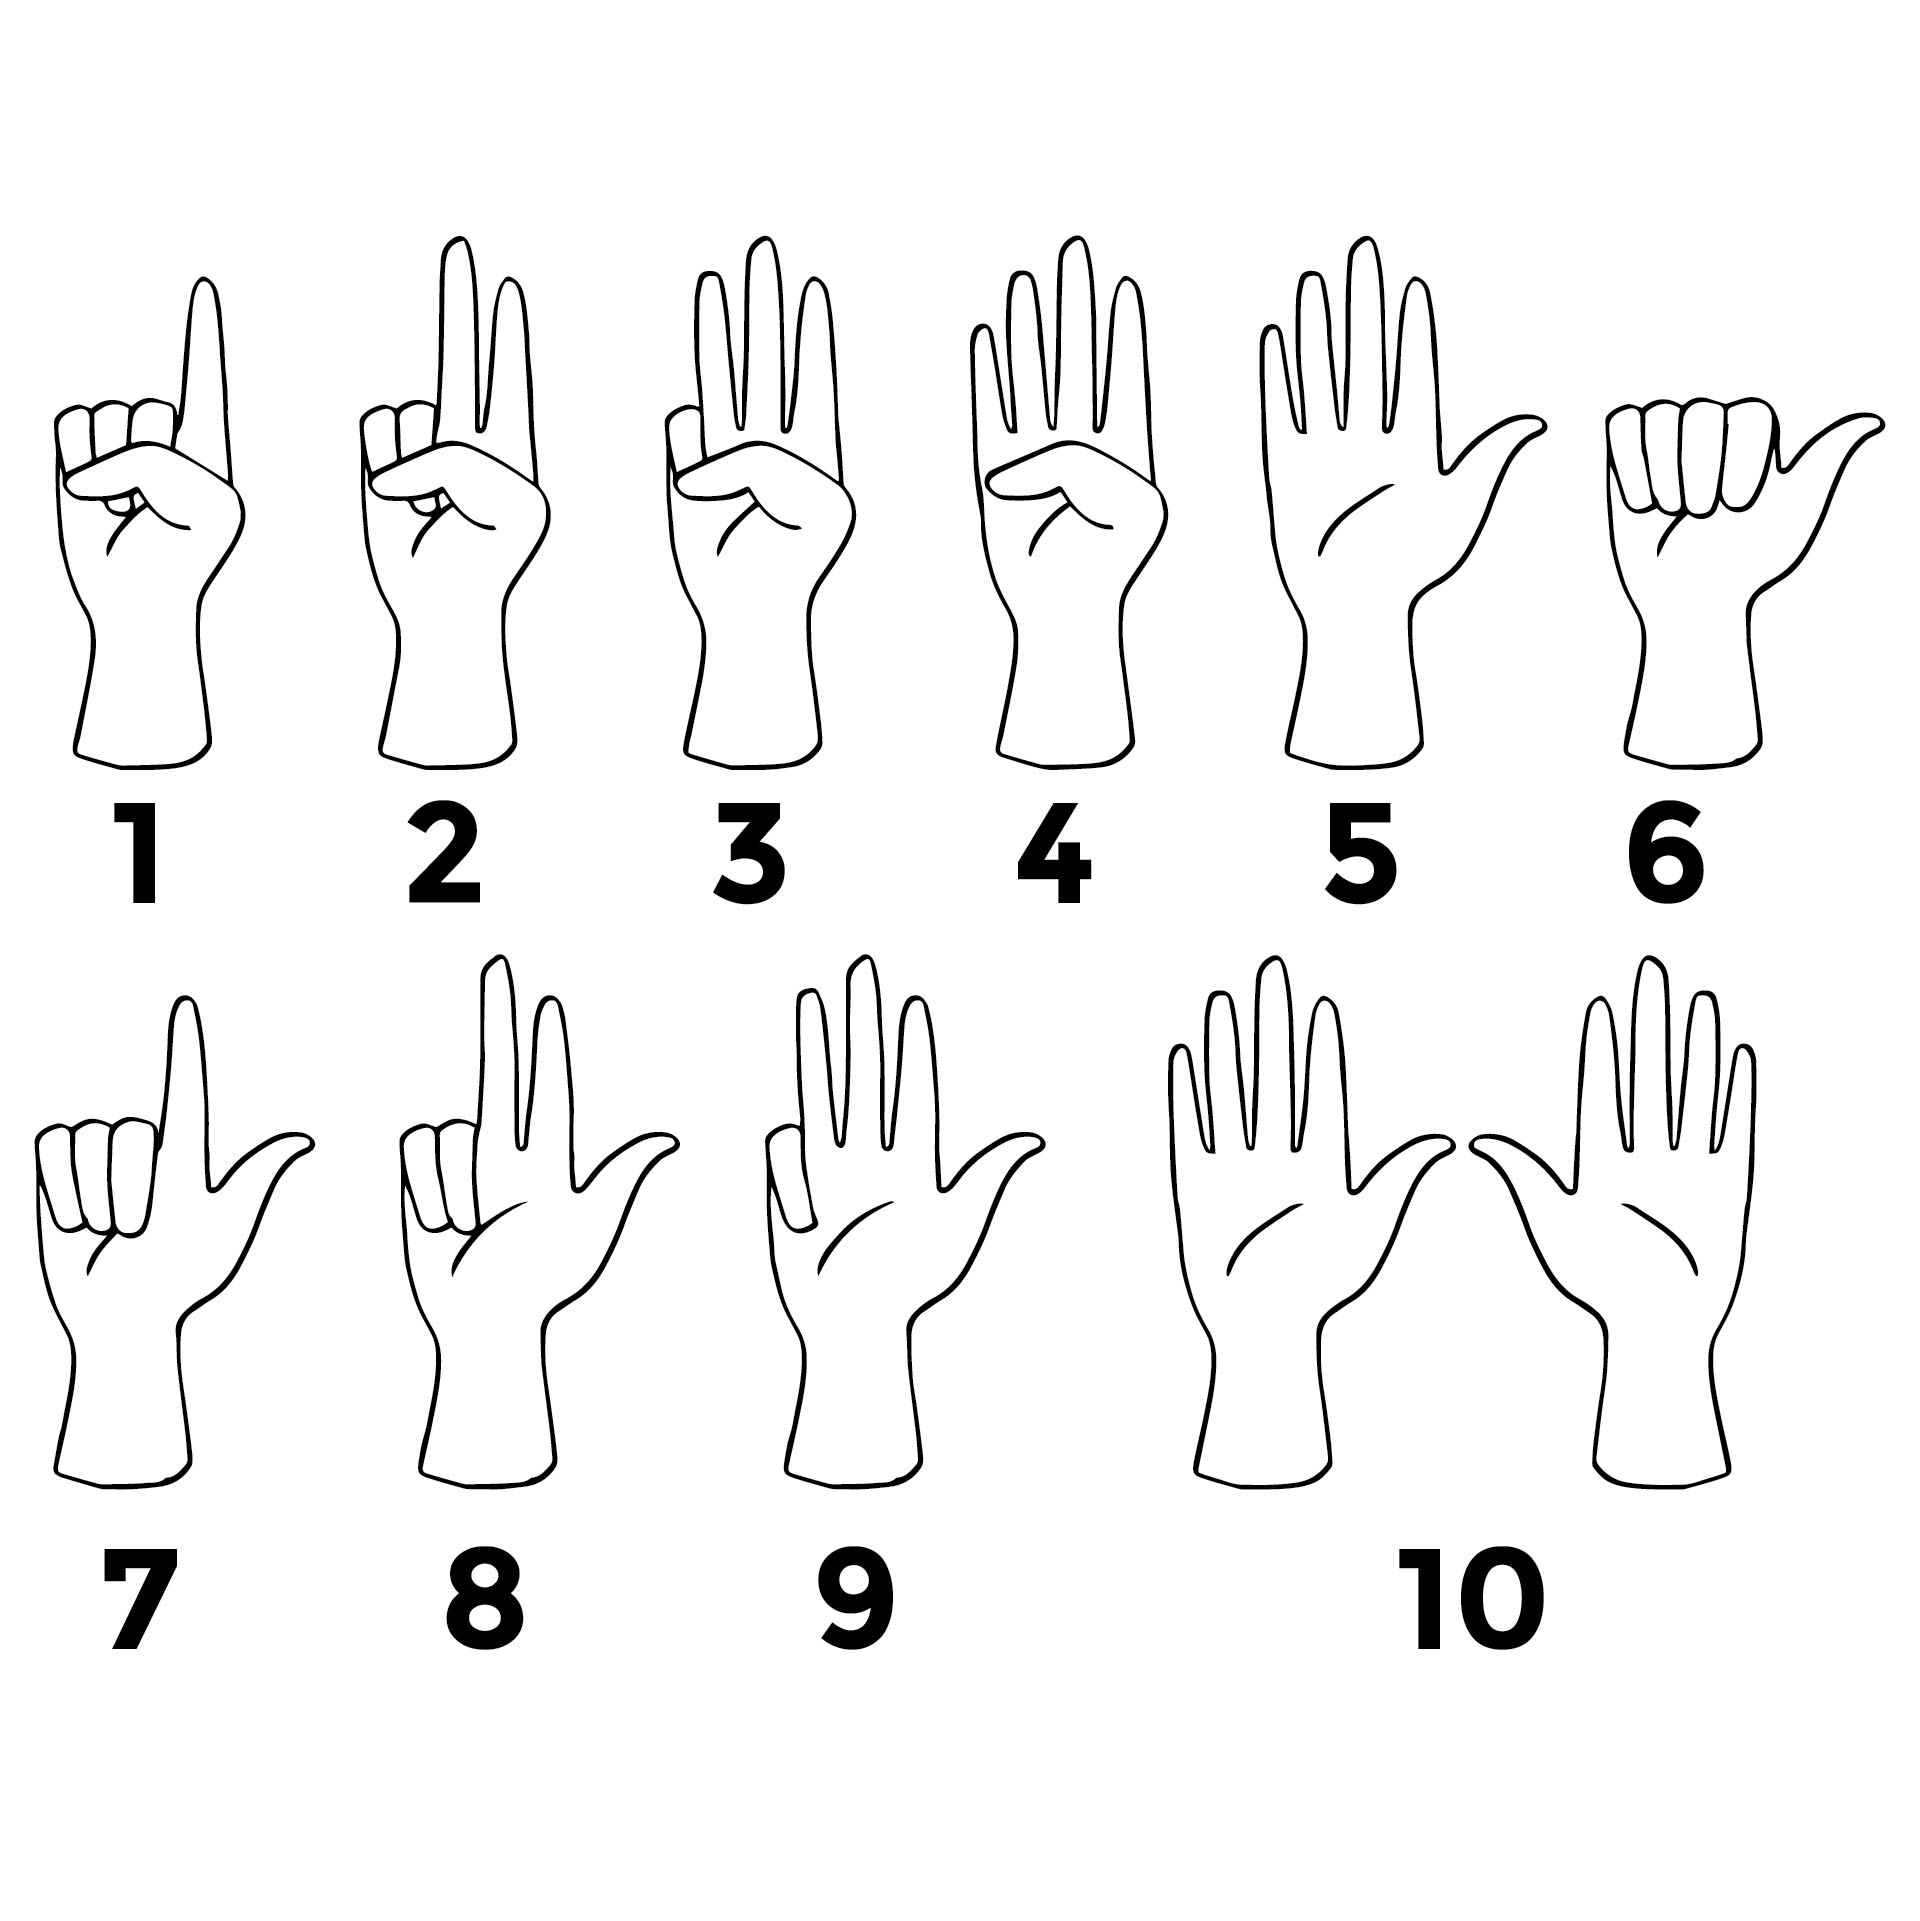 ASL Sign Language Number Chart